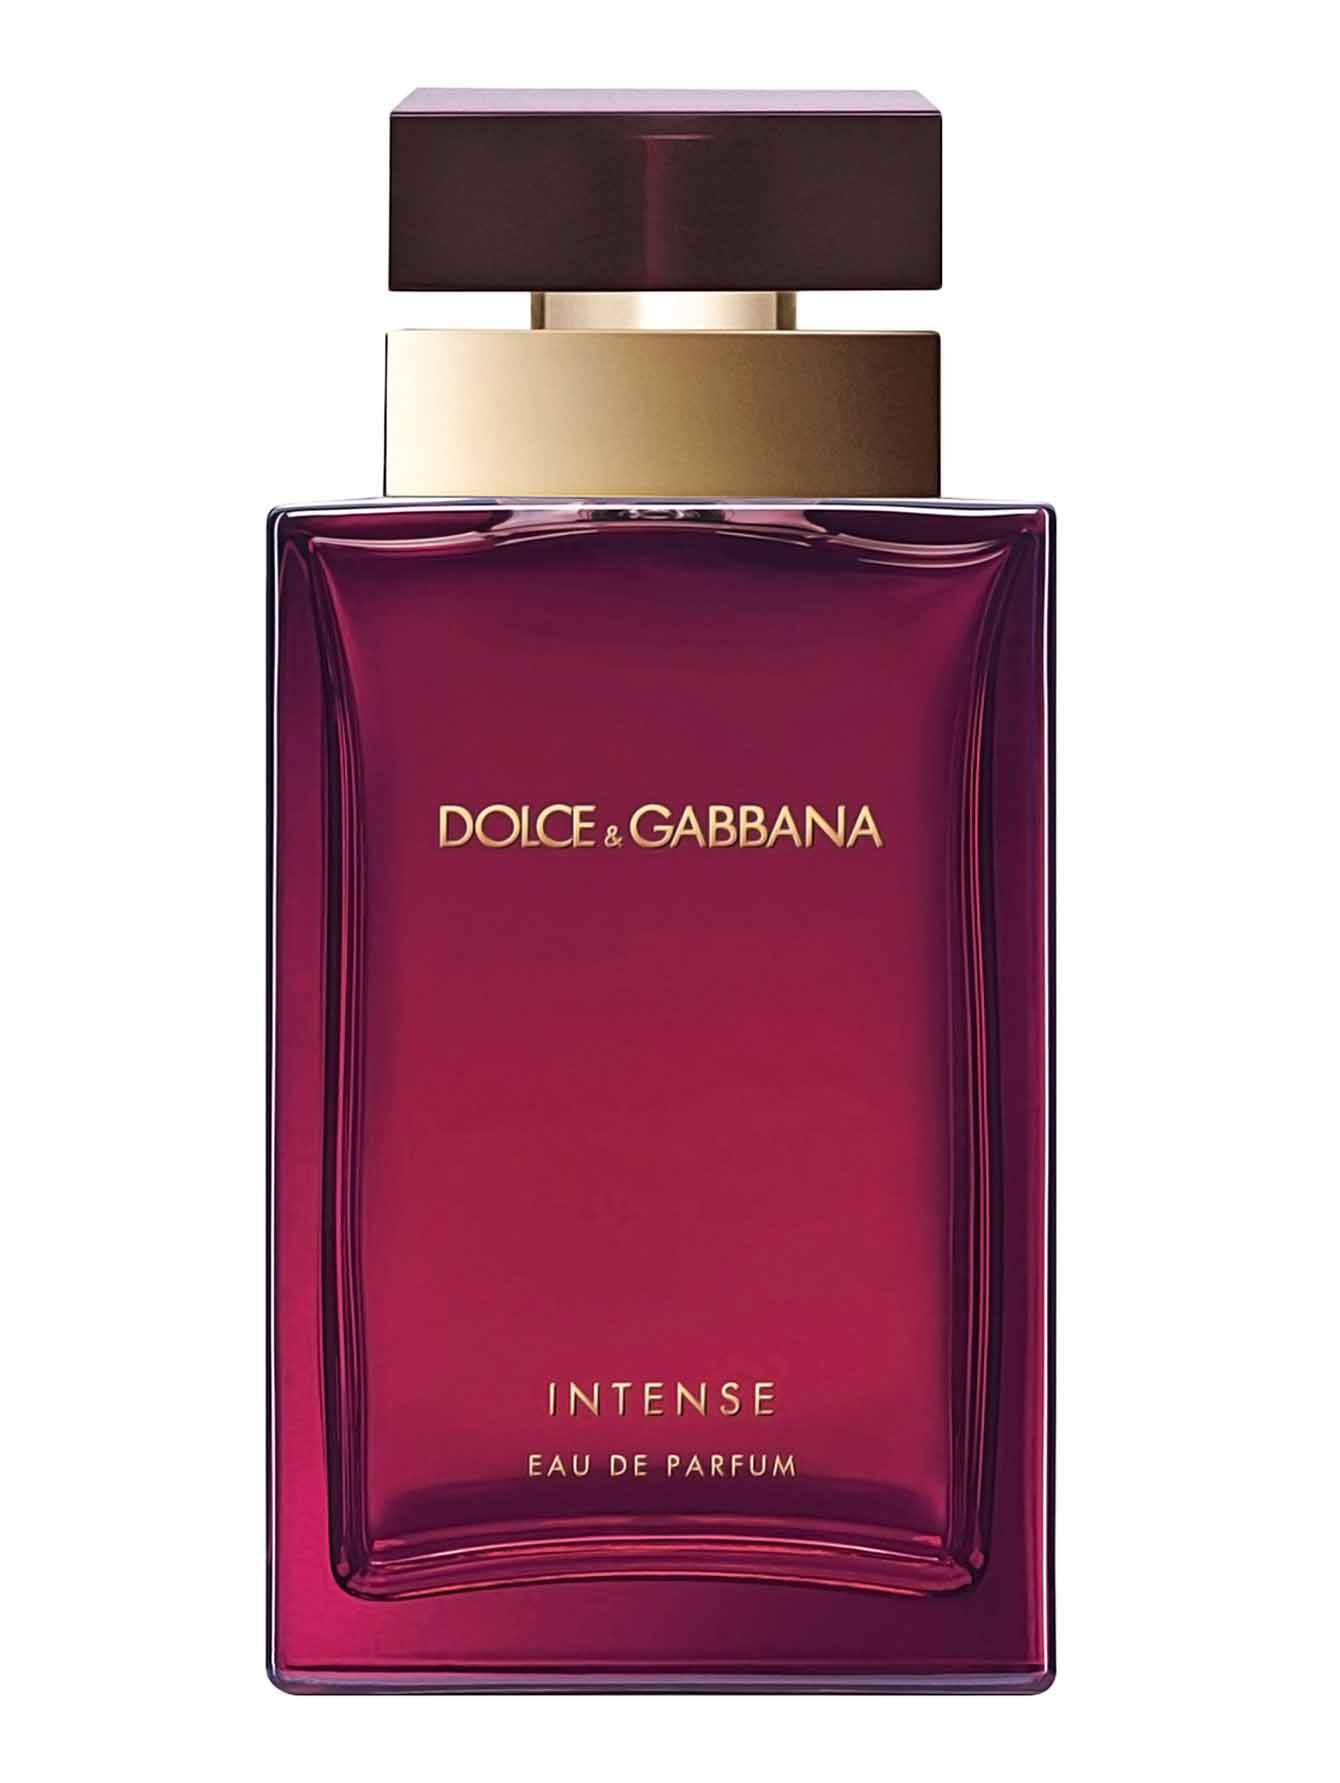 Dolce gabbana d. Dolce & Gabbana pour femme 100 мл. Дольче Габбана Интенс. Dolce&Gabbana pour femme intense. Dolce Gabbana intense женские 100ml.